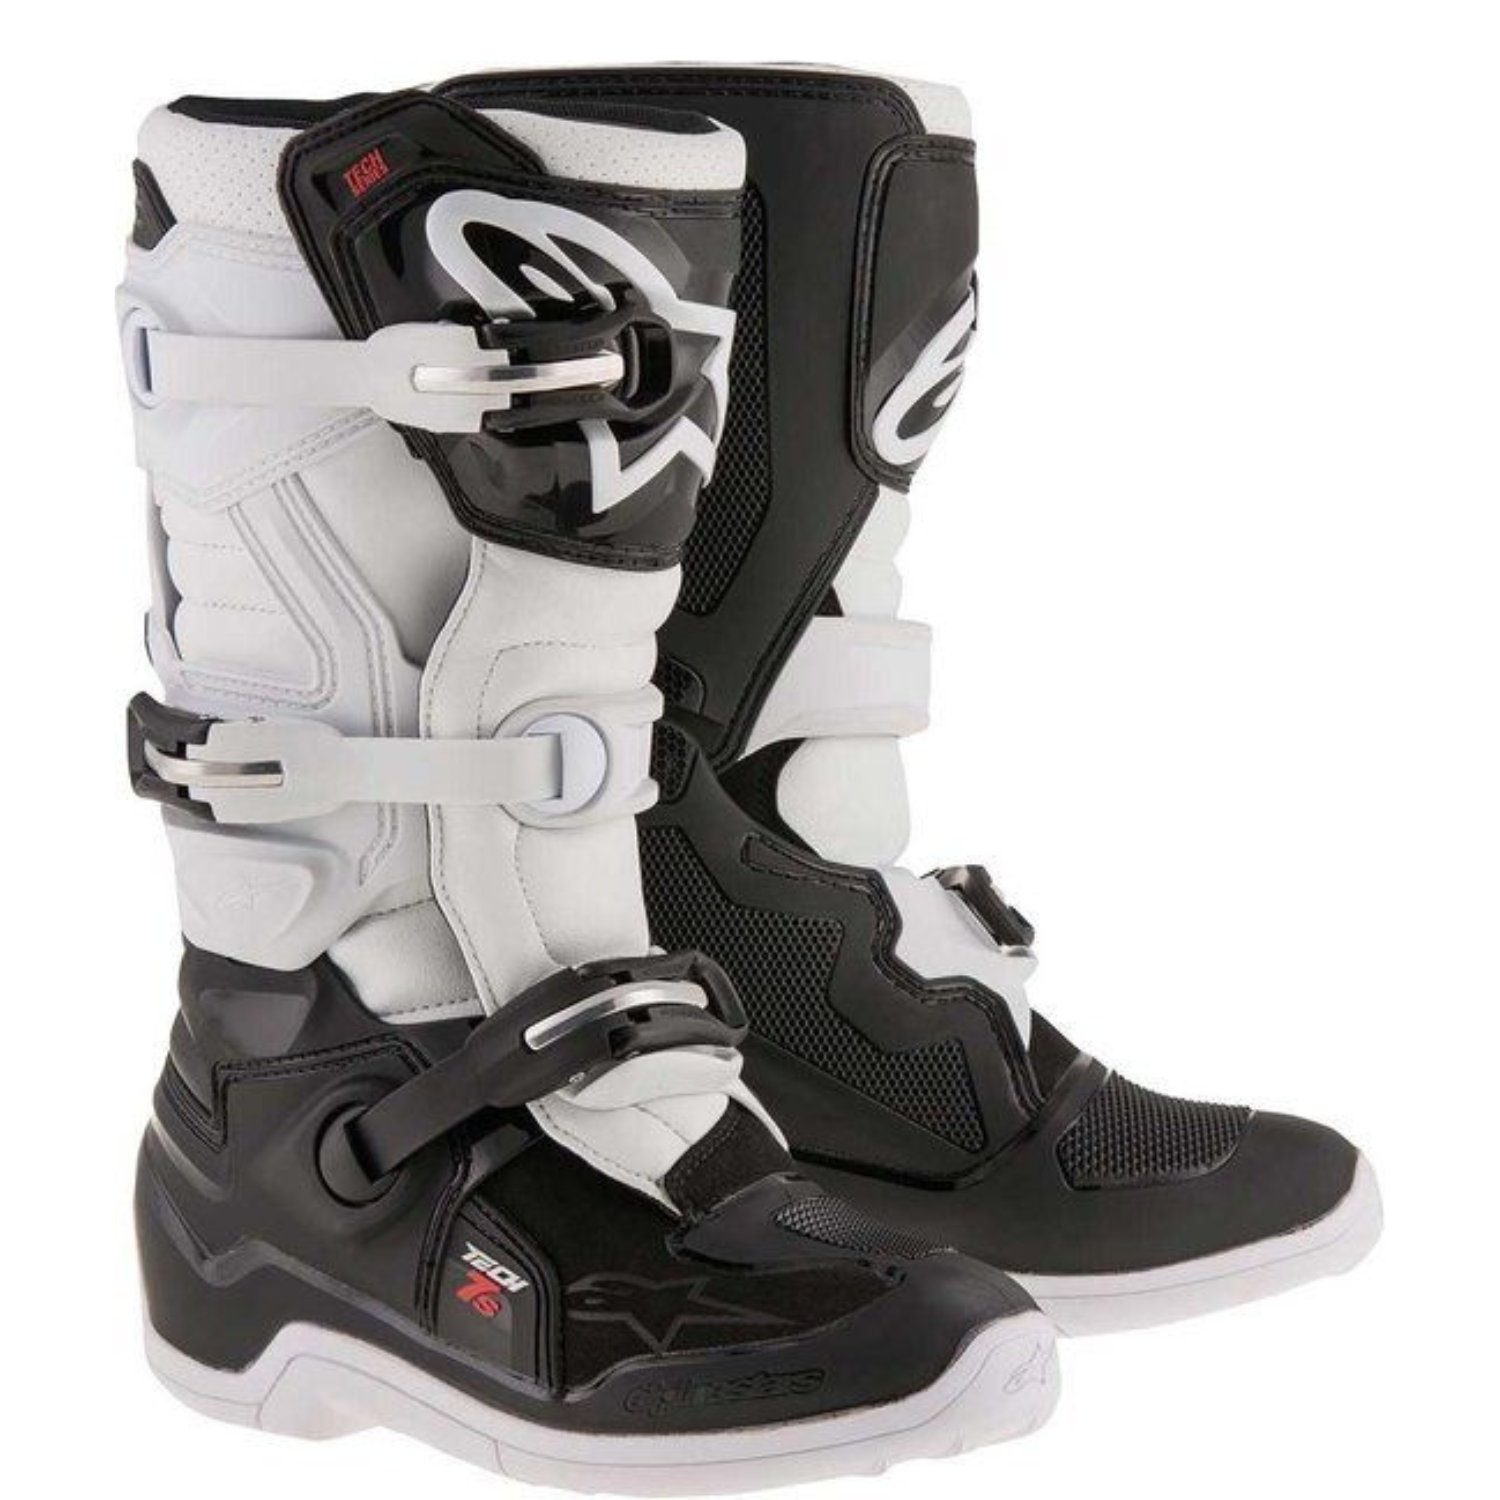 Image of Alpinestars Tech 7 S Black White Boots Talla US 5